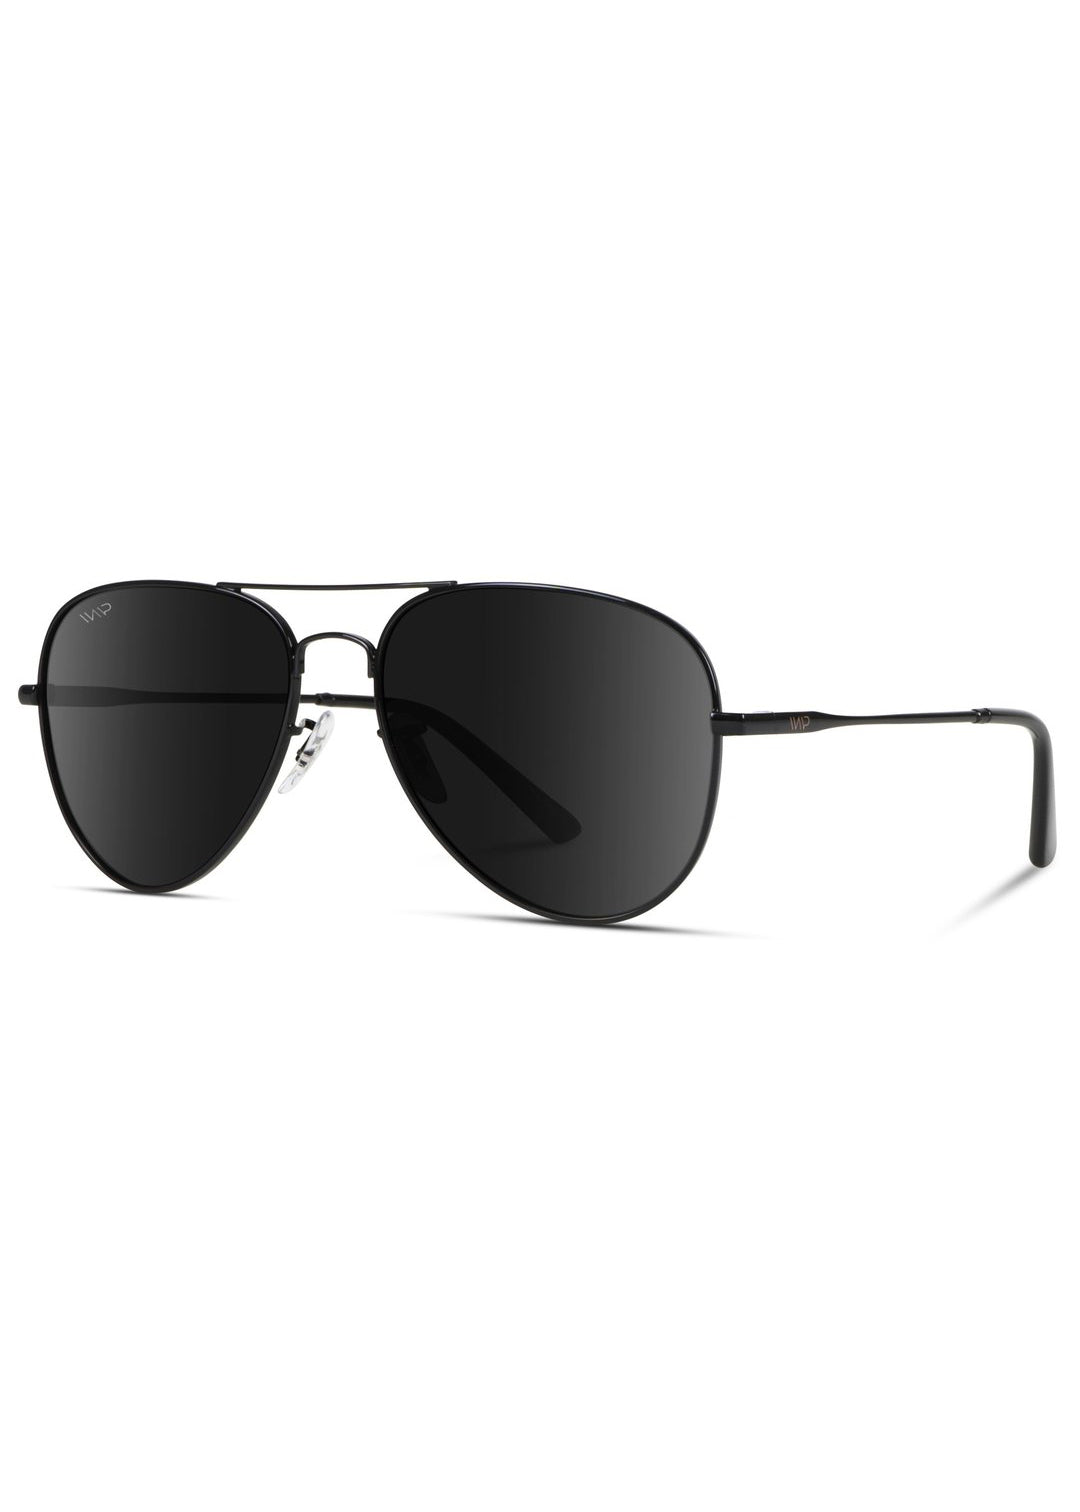 Black Classic Aviator Glasses - FINAL SALE Accessories